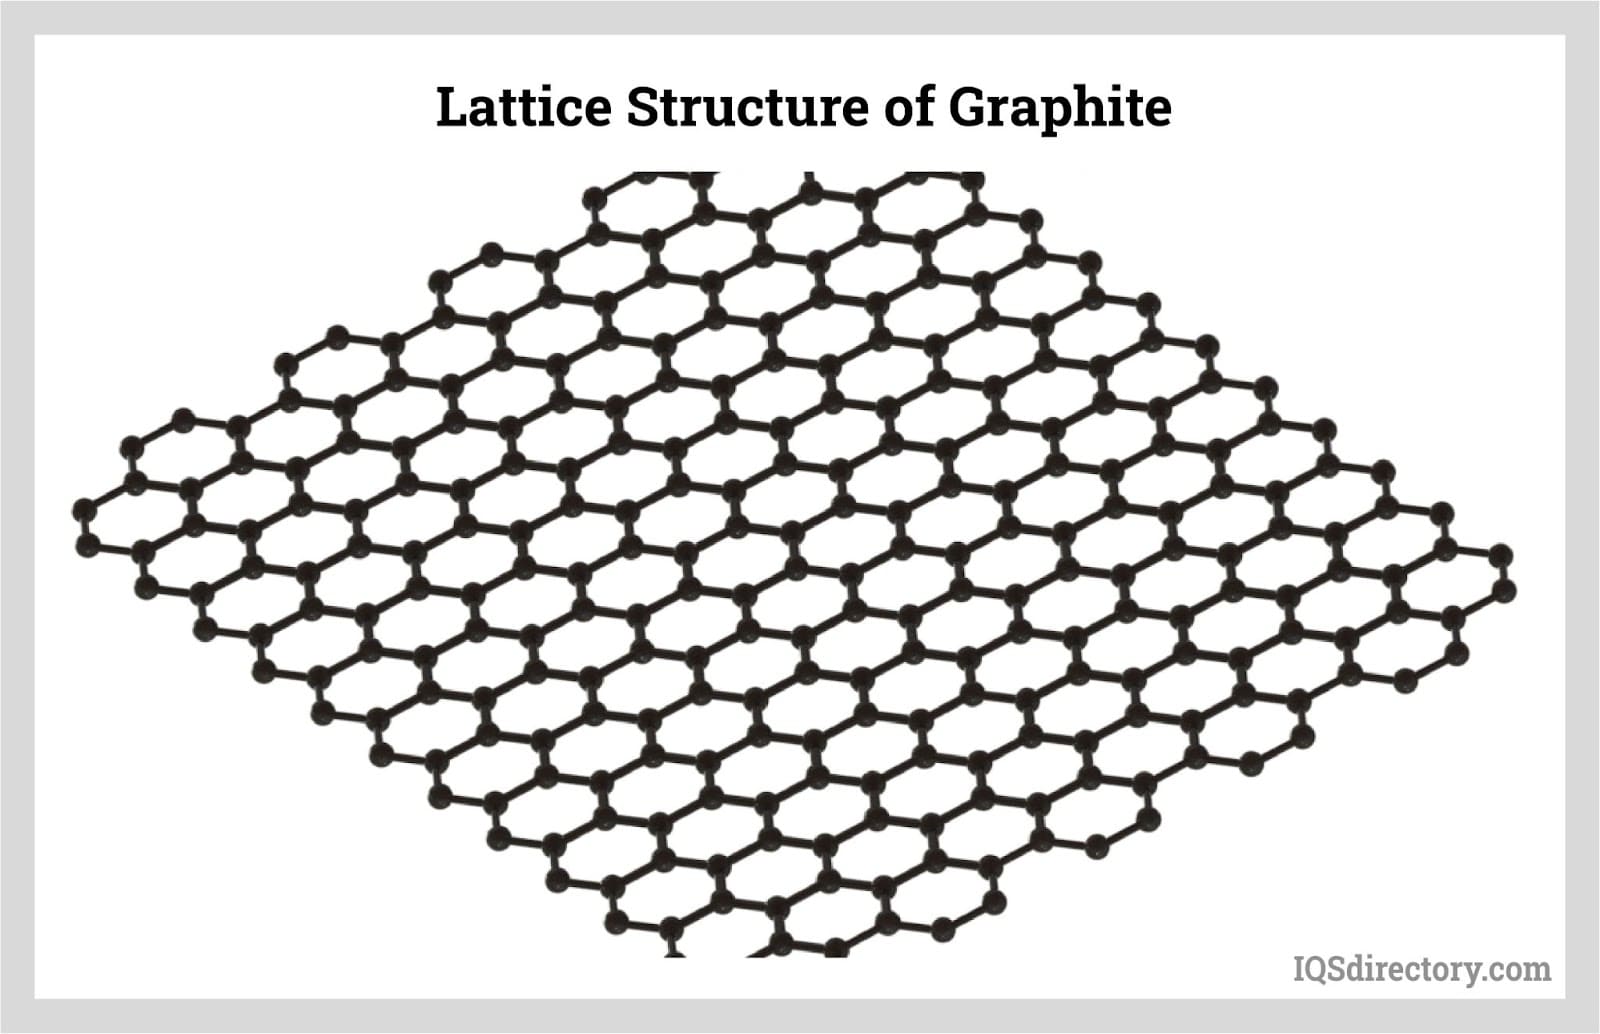 Lattice Structure of Graphite